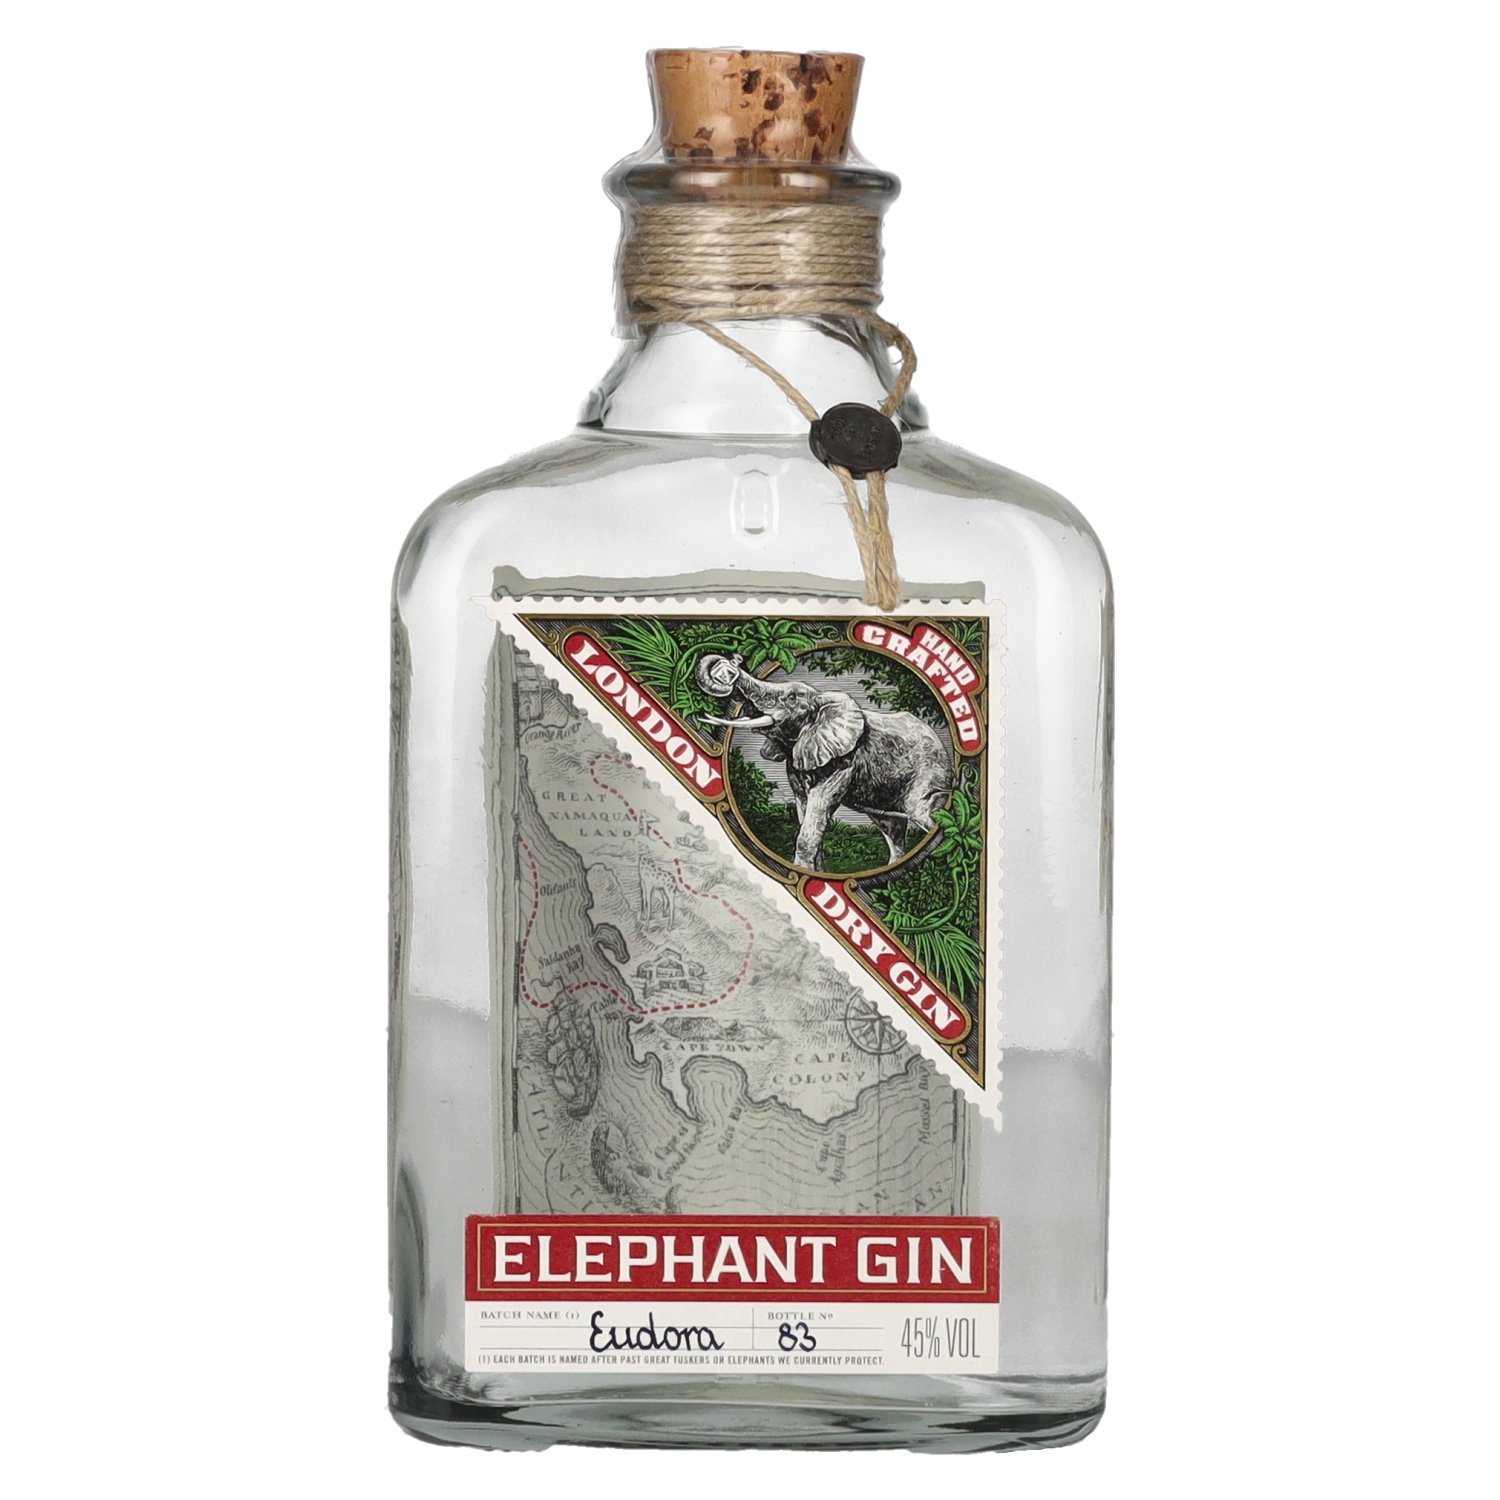 Elephant Vol. delicando 0,5l London - Gin Dry 45%